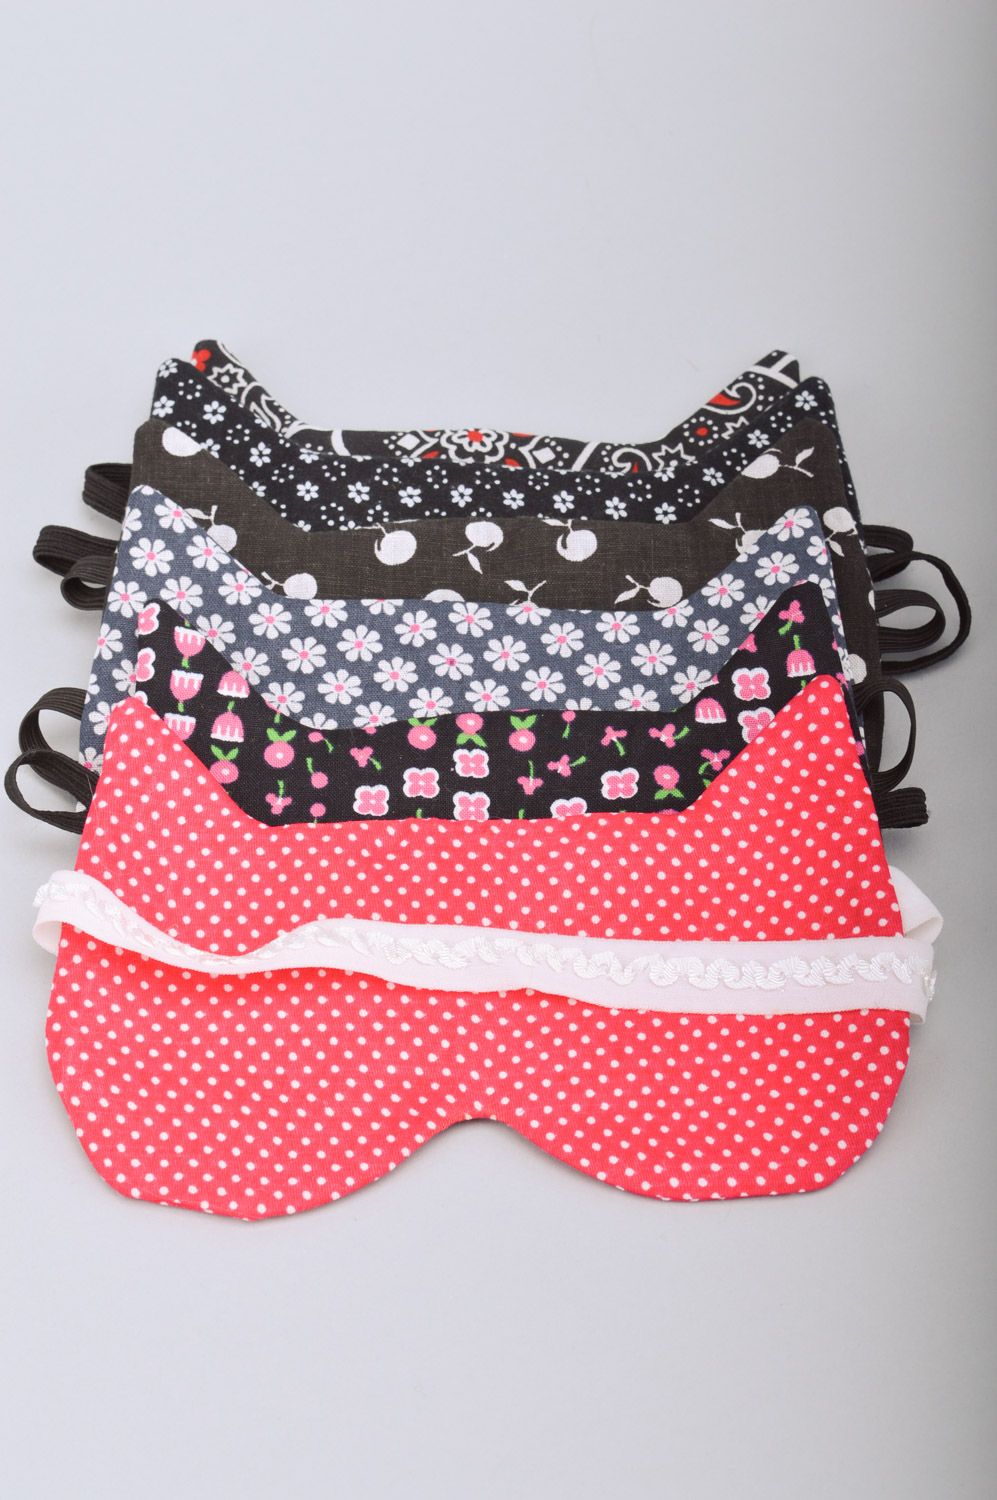 Handmade cute sleep mask sewn of pink polka dot cotton fabric for women photo 2